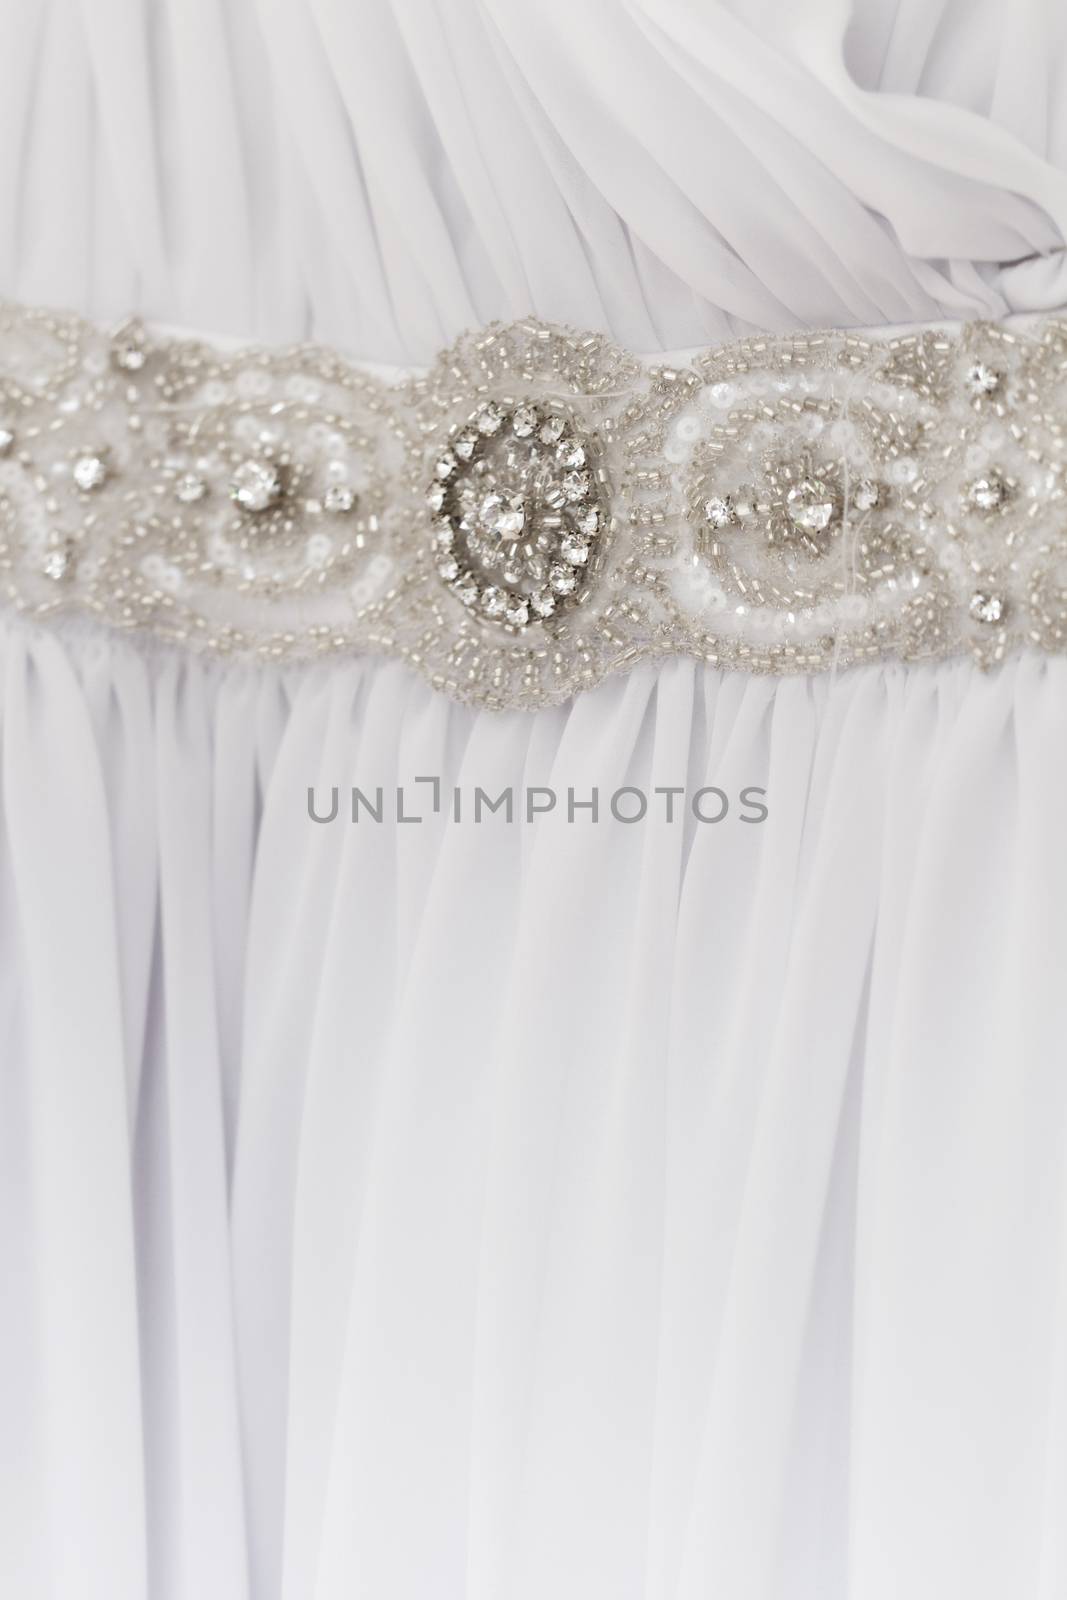 Wedding dress belt by Nneirda